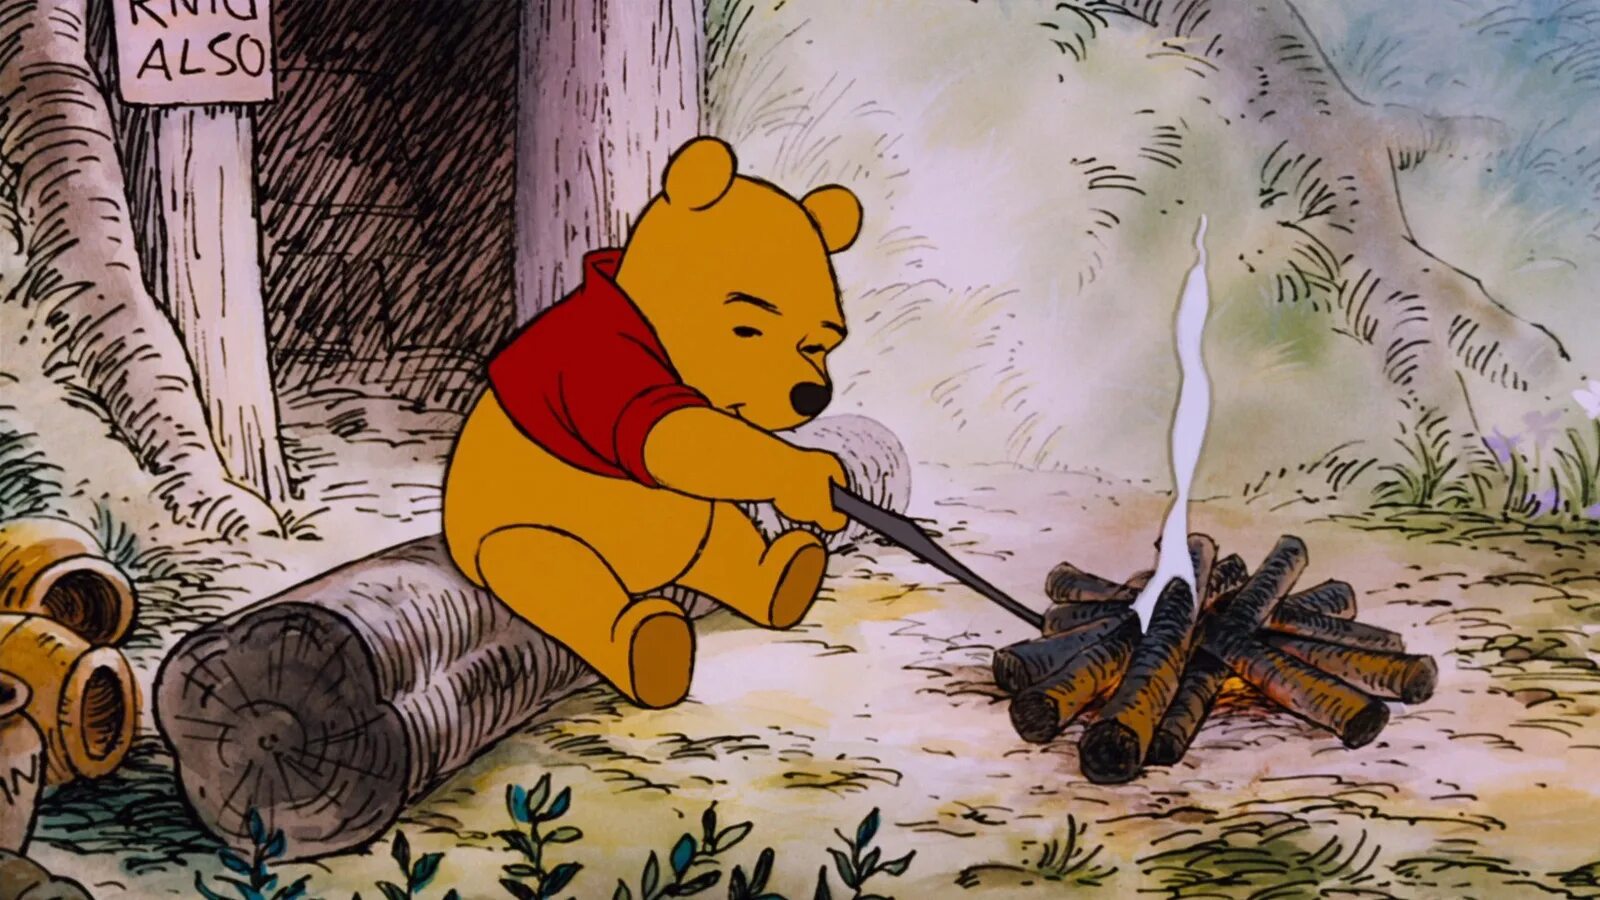 Winnie the pooh adventures. Приключения Винни пуха 1977. Винни пух Дисней 1966. Винни пух 1977 Винни. Винни пух 1969.